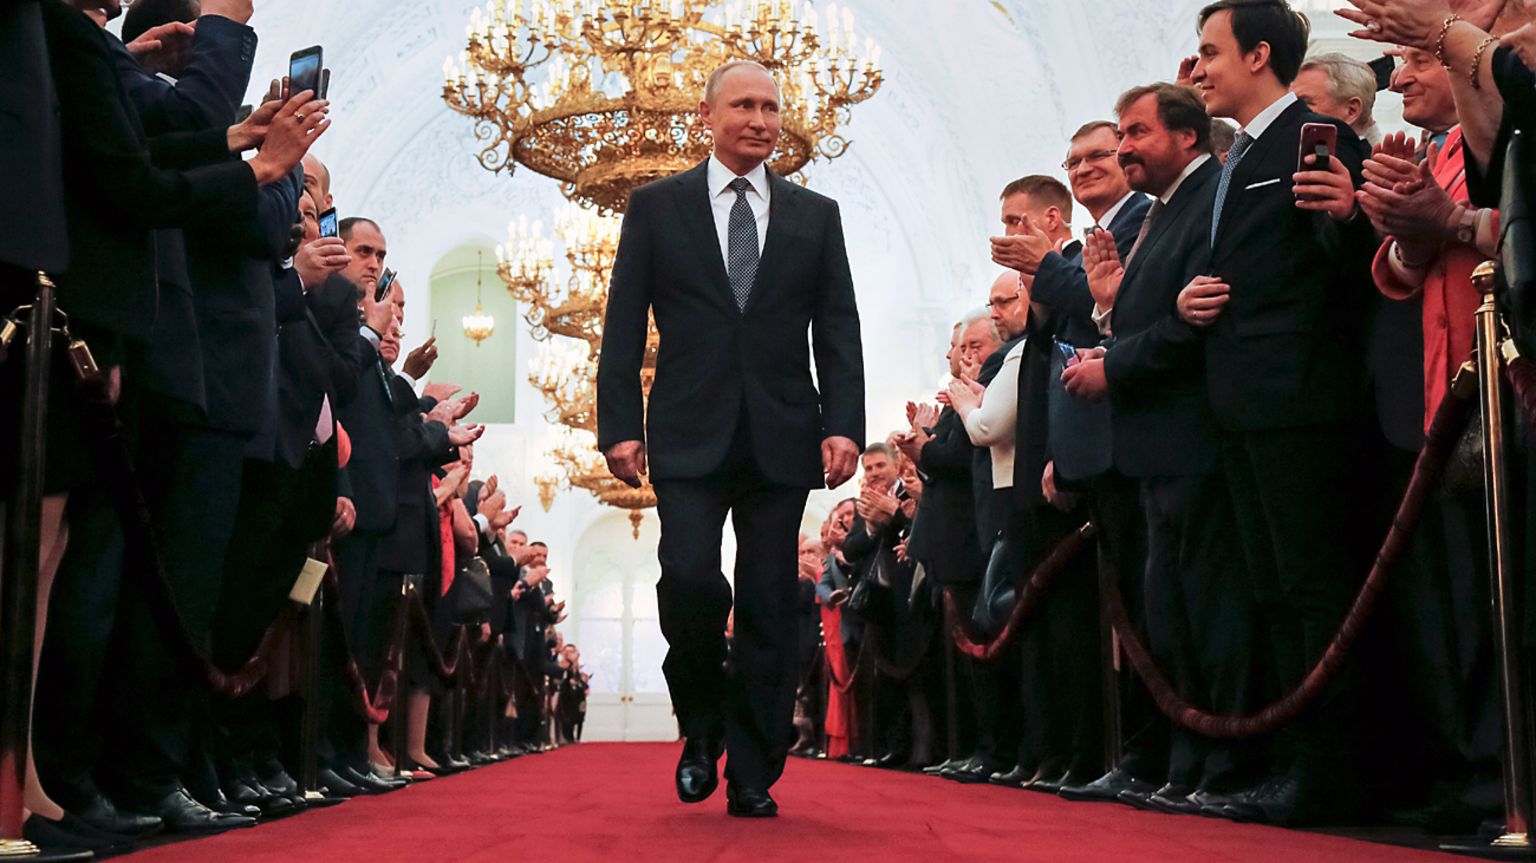 President Putin's inauguration ceremony, May 2018